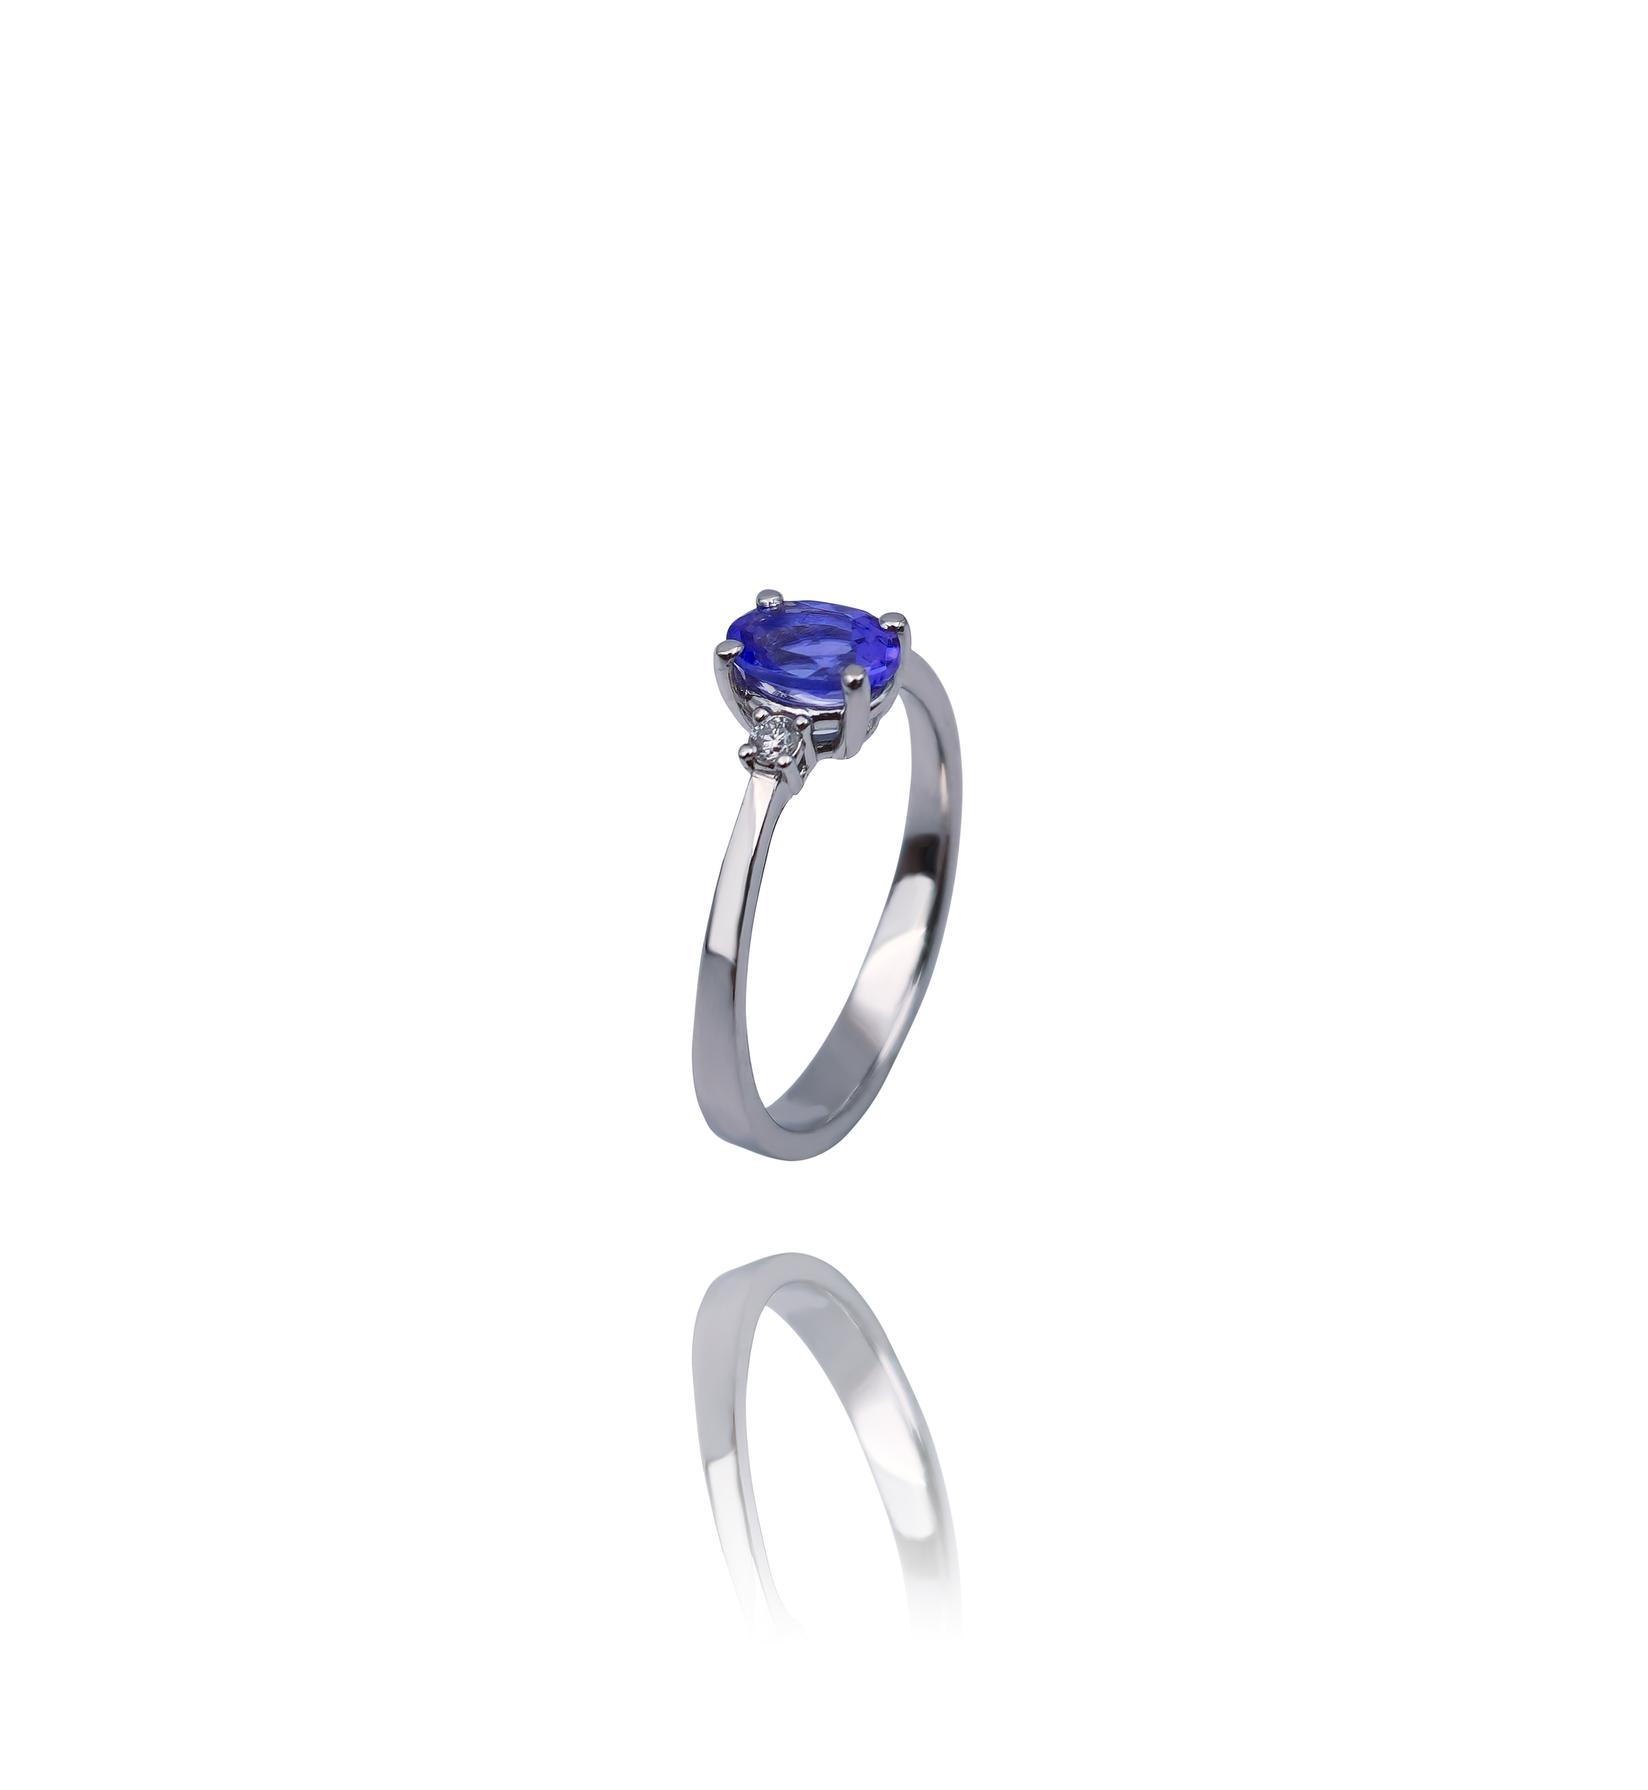 Selected image for Ženski prsten od Belog zlata sa Brilijantima i Tanzanitom 585, 15mm